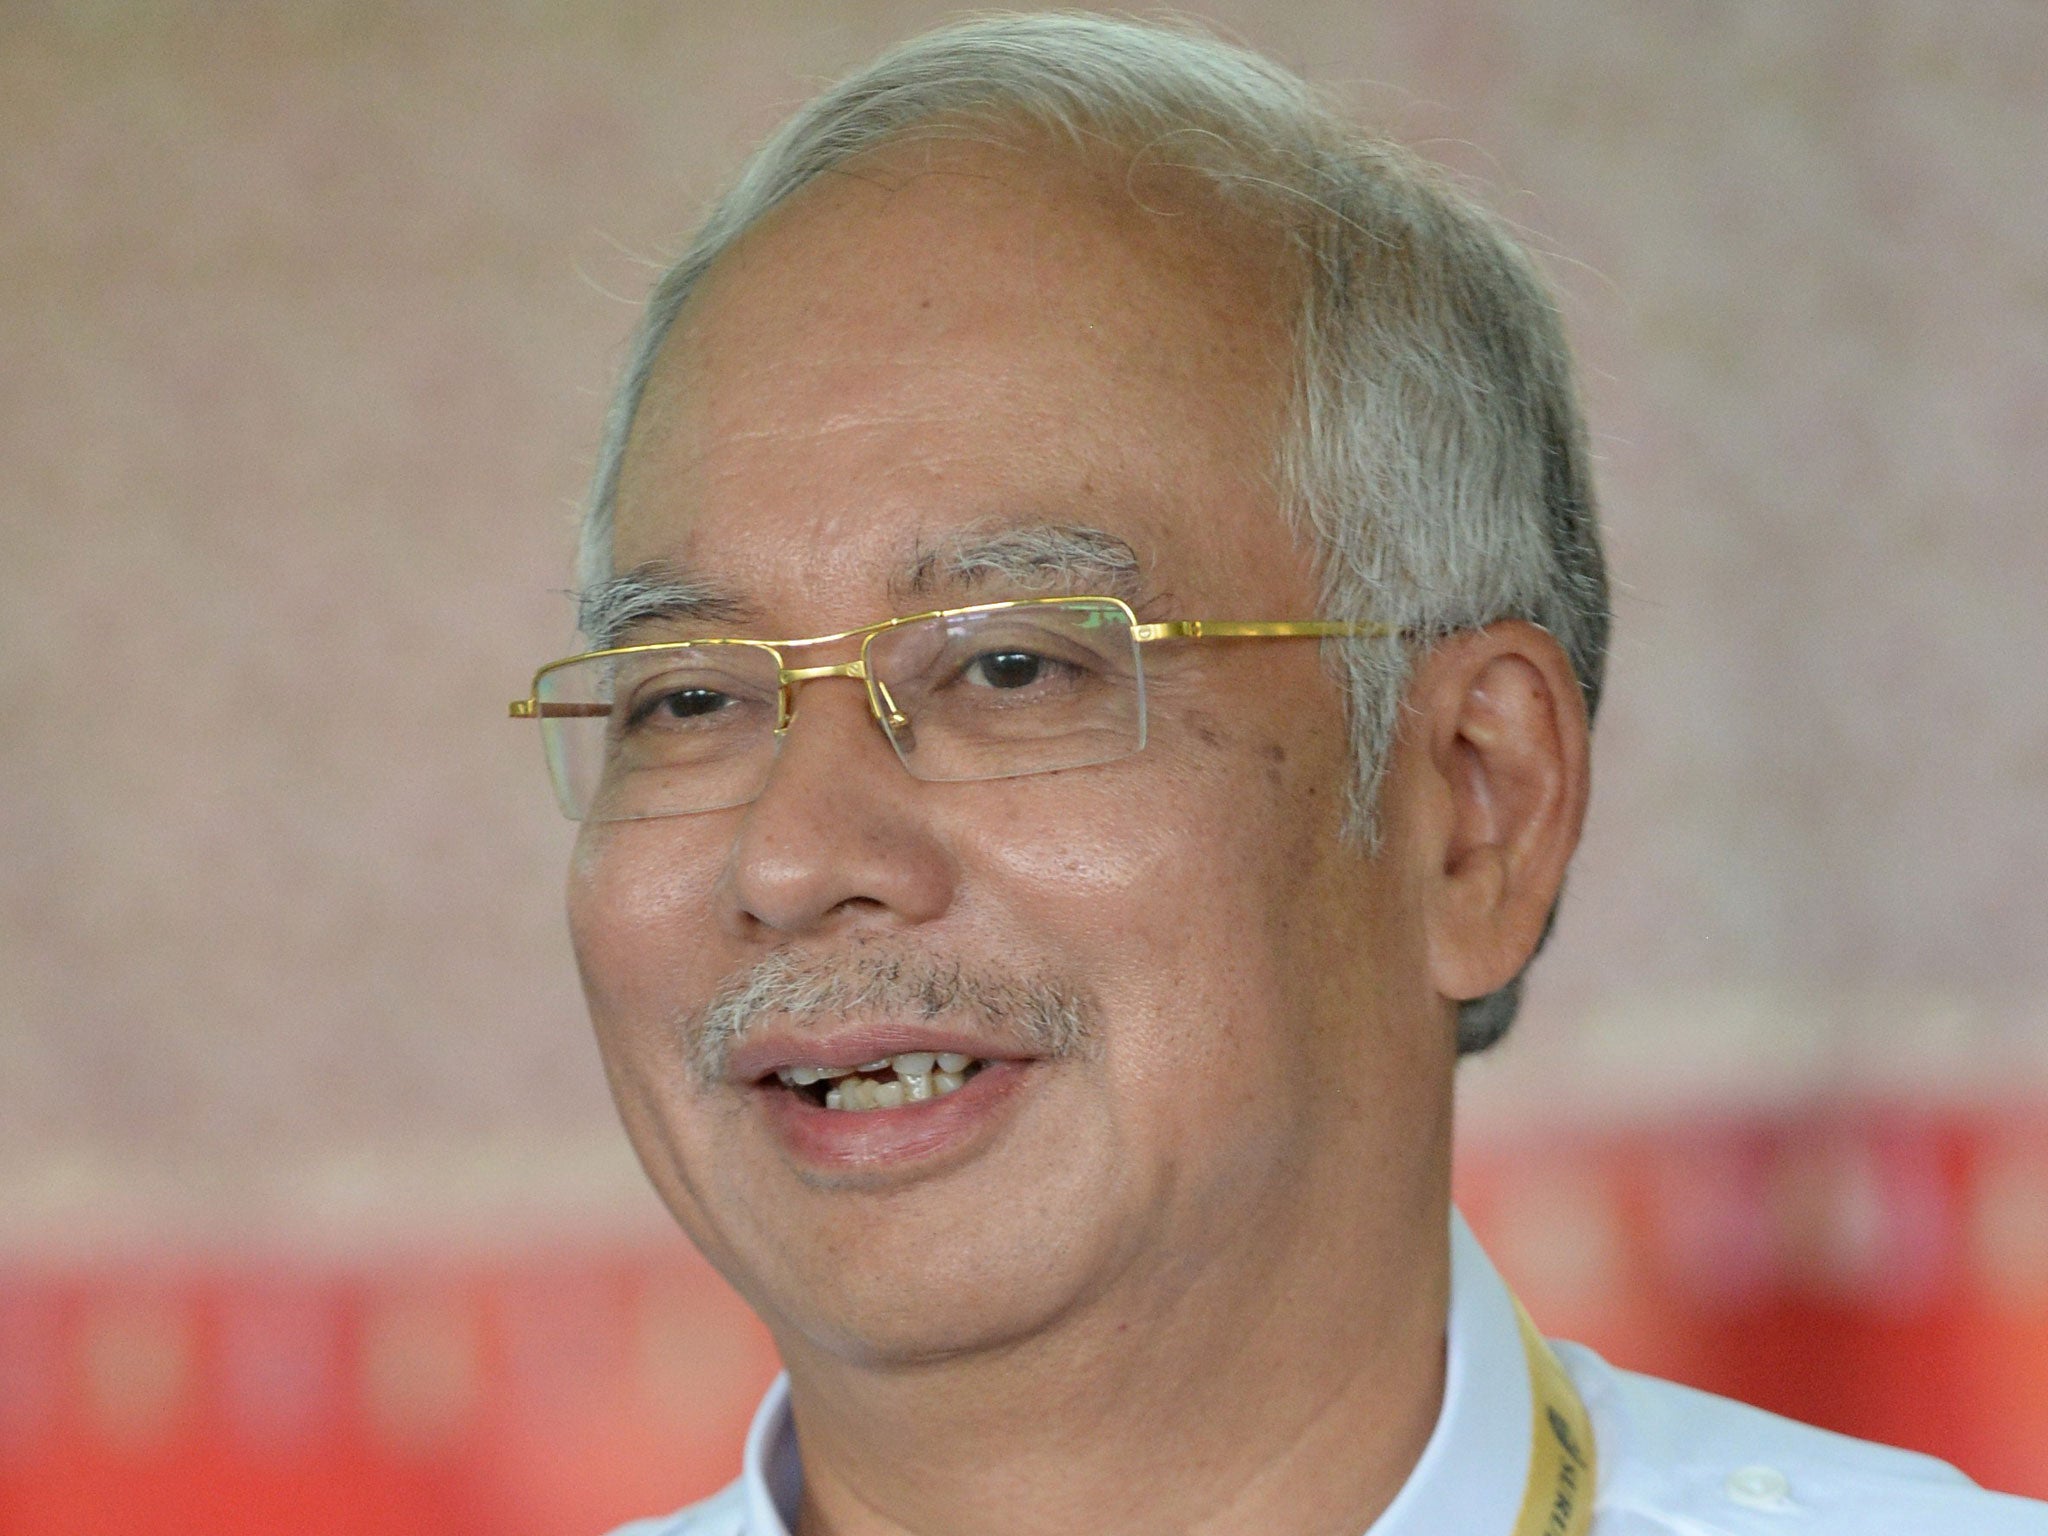 Prime Minister Najib Razak's National Front coalition captured 112 of Malaysia's 222 parliamentary seats